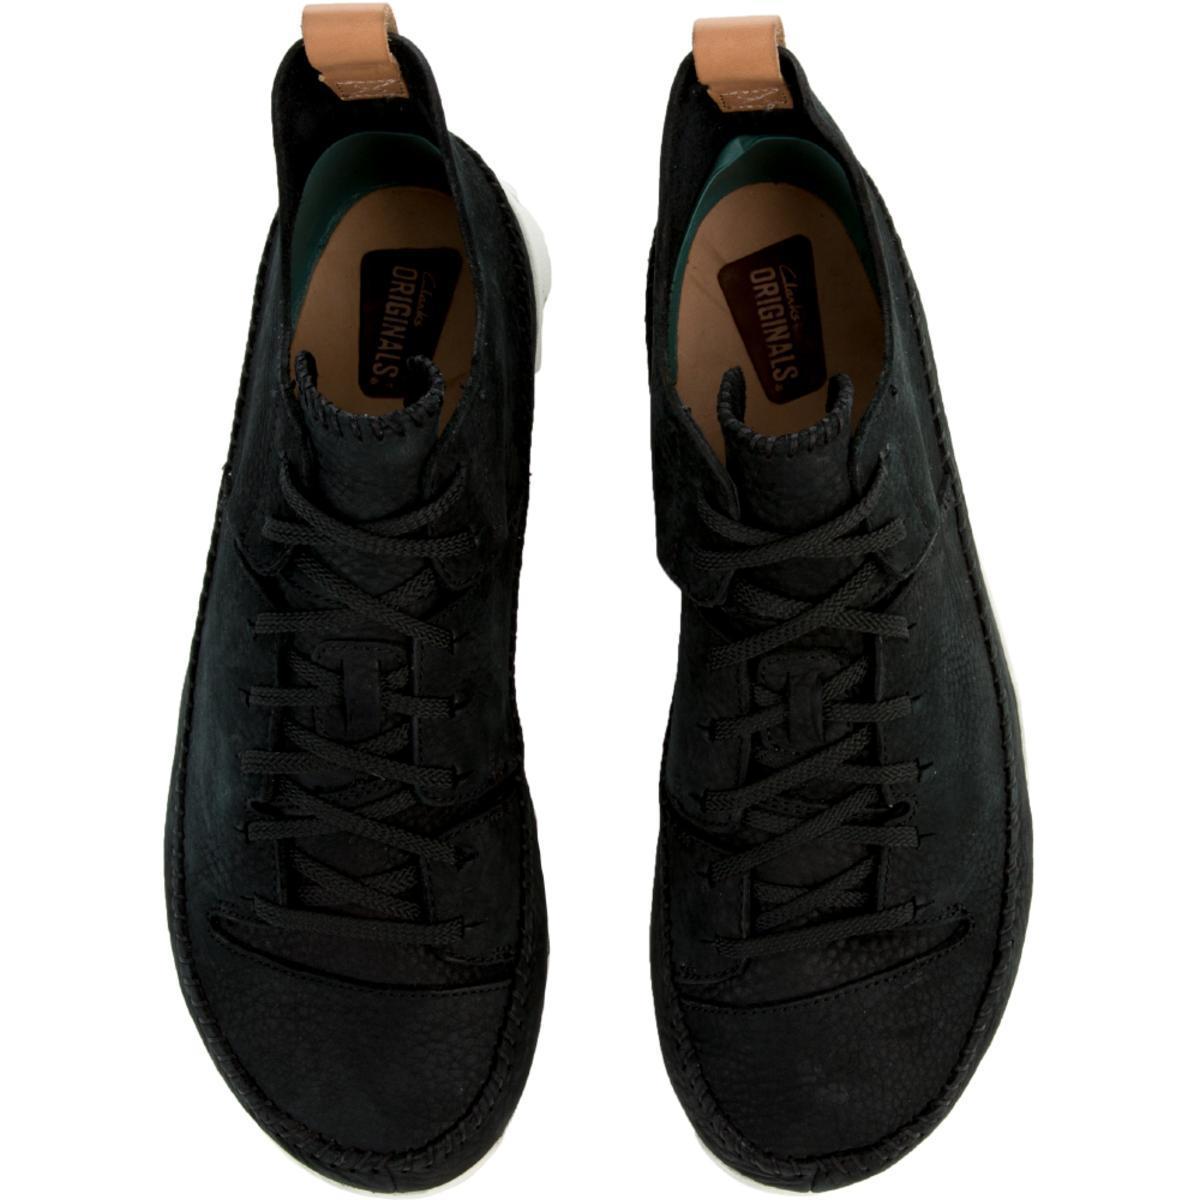 Clarks Leather Black Trigenic Flex Nubuck Sneakers for Men - Lyst